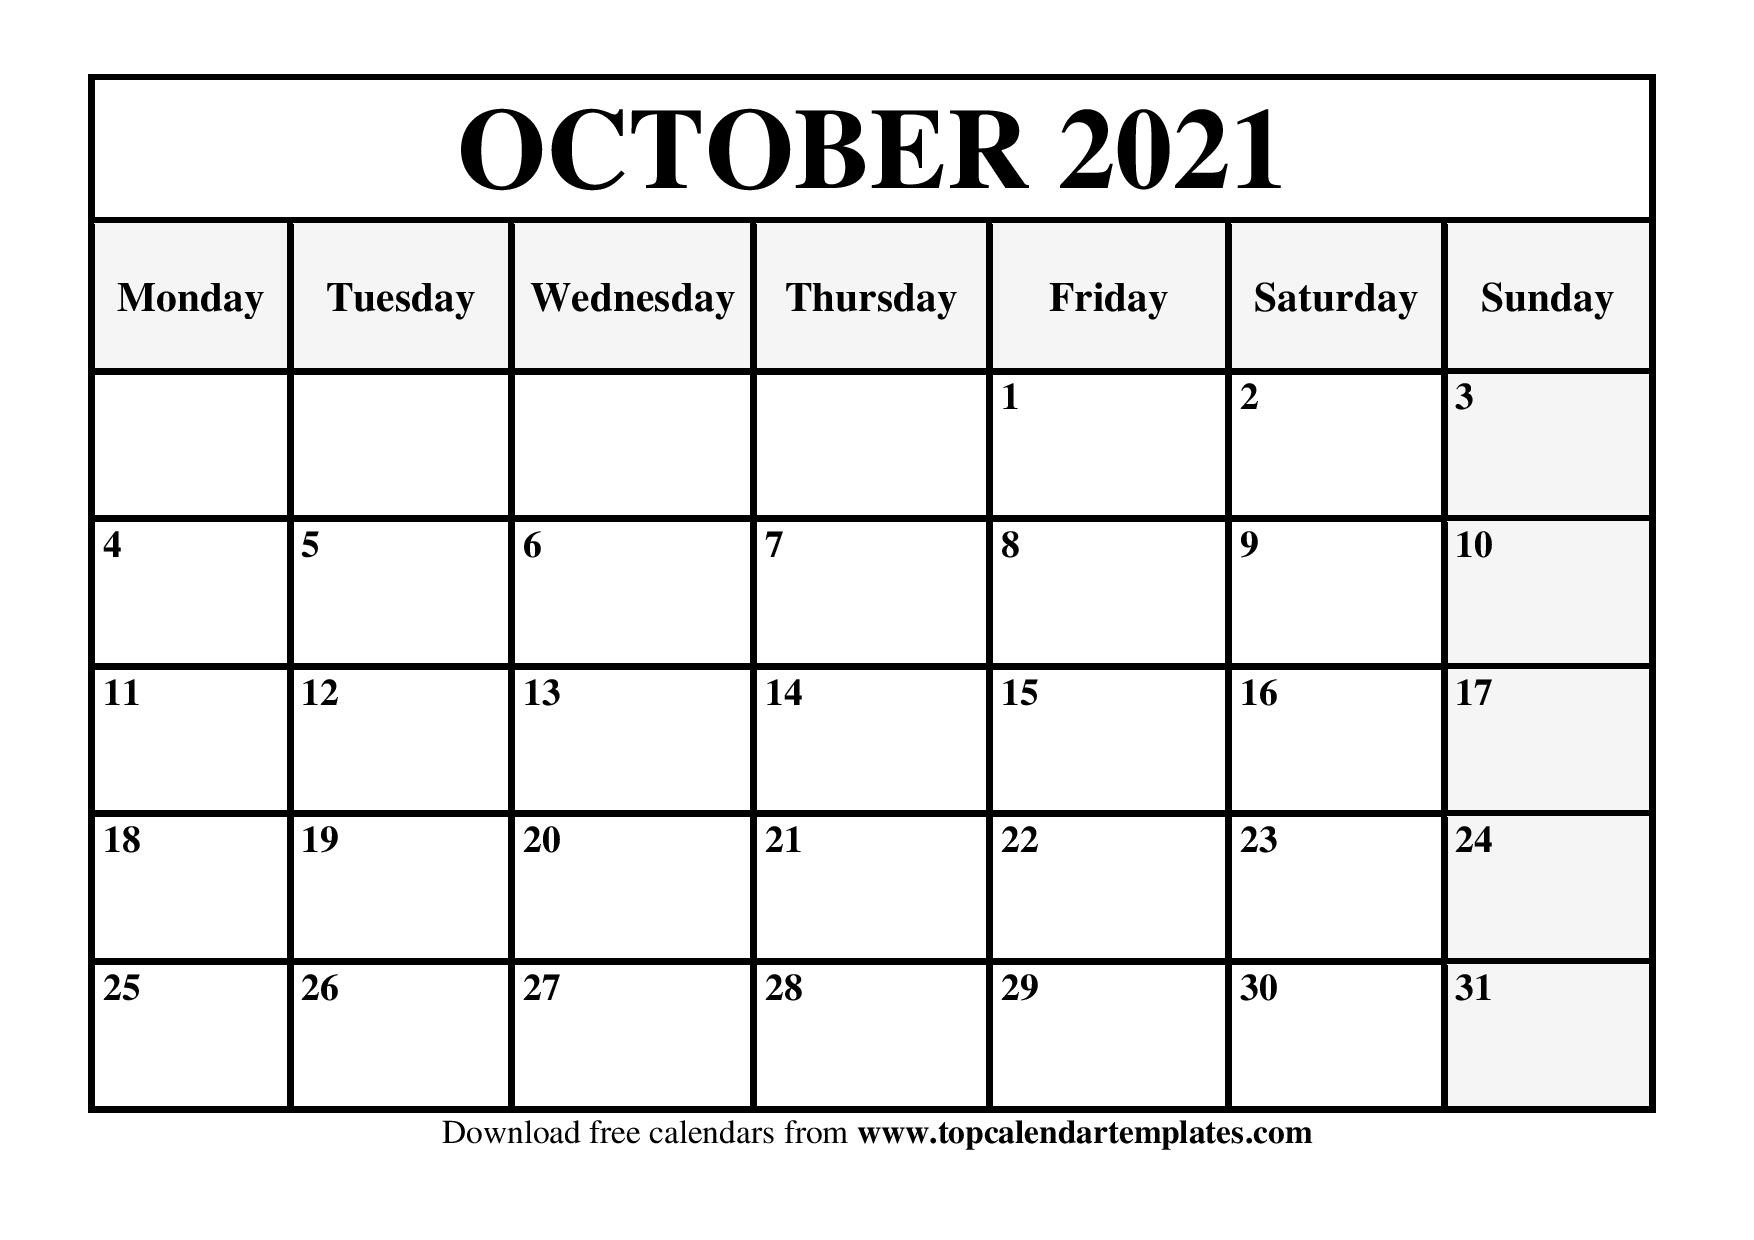 Free October 2021 Calendar Printable - Blank Templates-Oct Calendar 2021 Beta Calendars